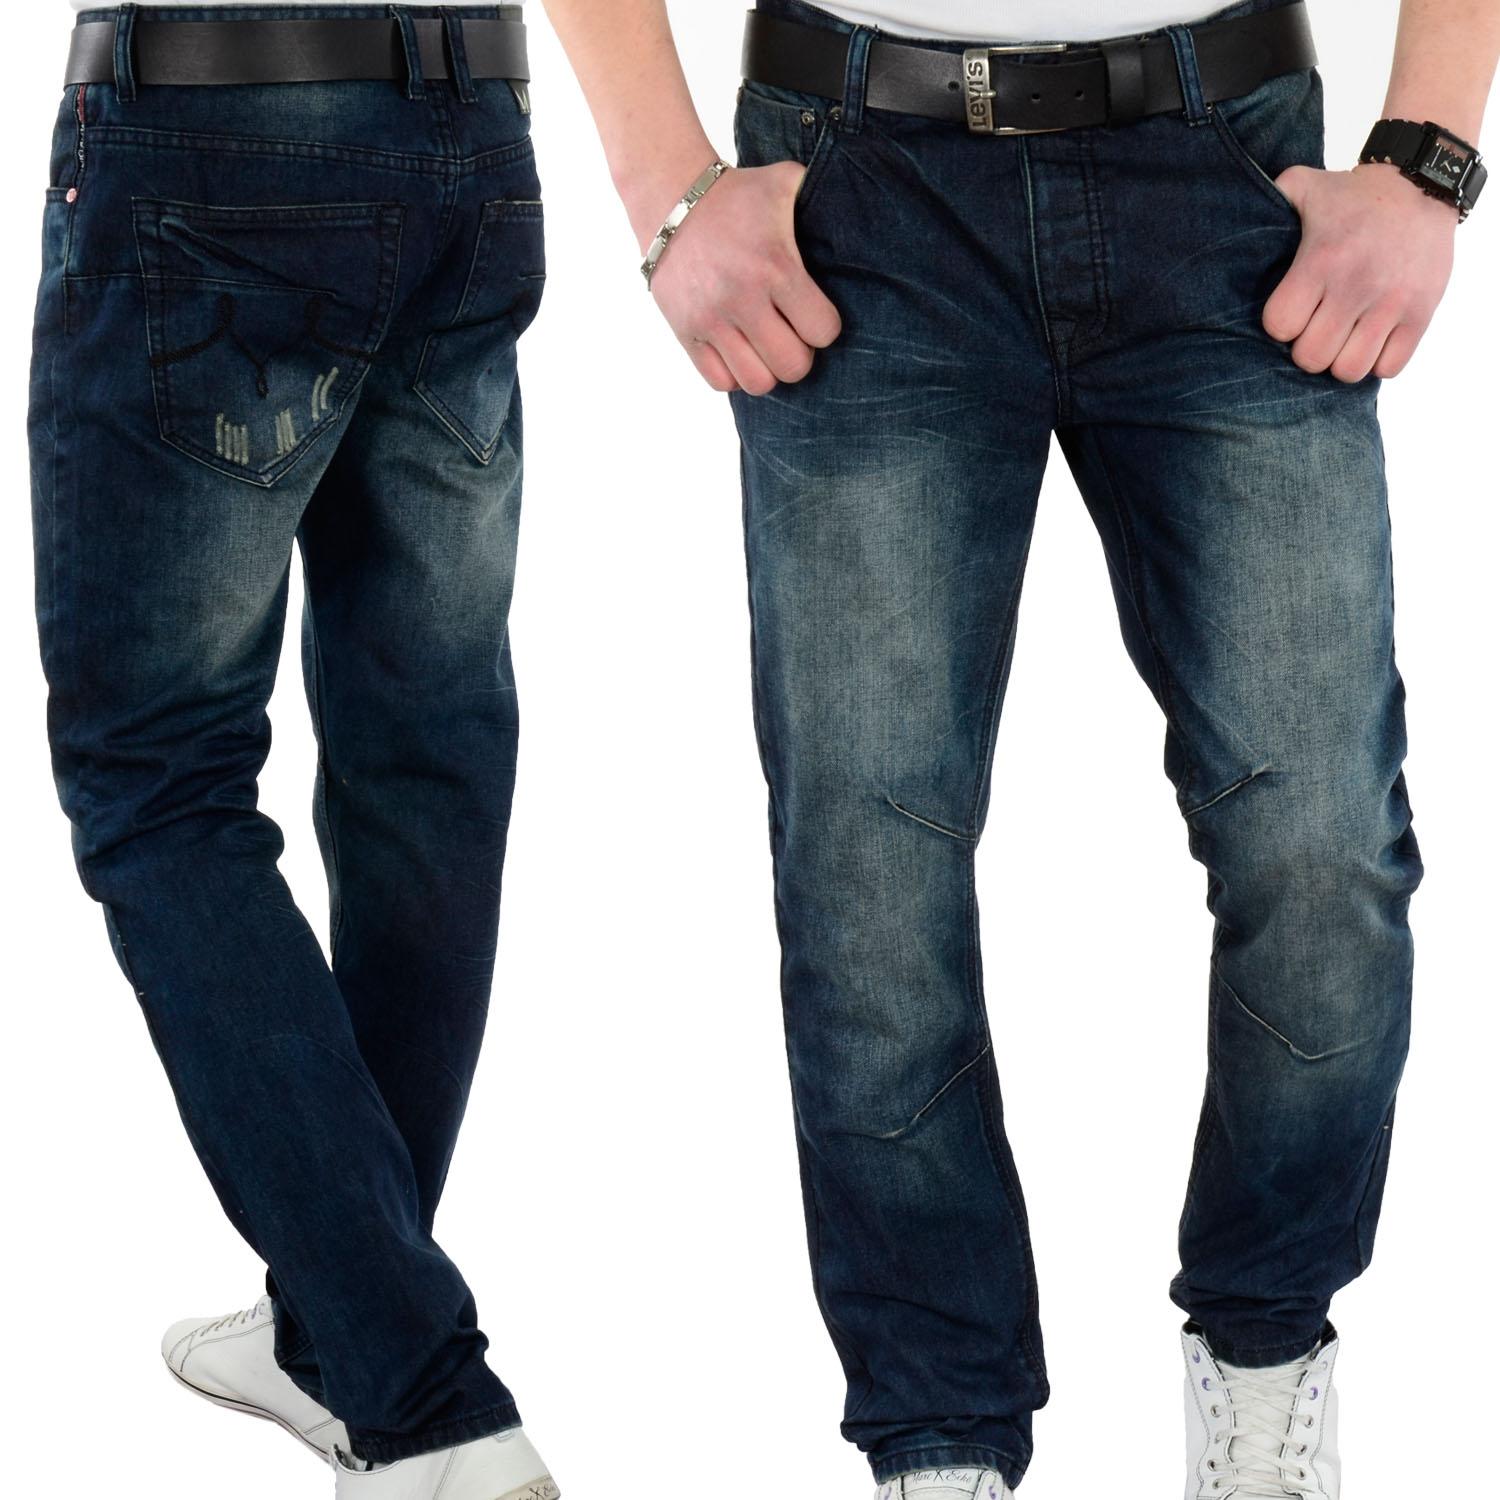 Foto Patria Mardini Hombres Slim Fit Jeans De Color Azul Oscuro foto 530978